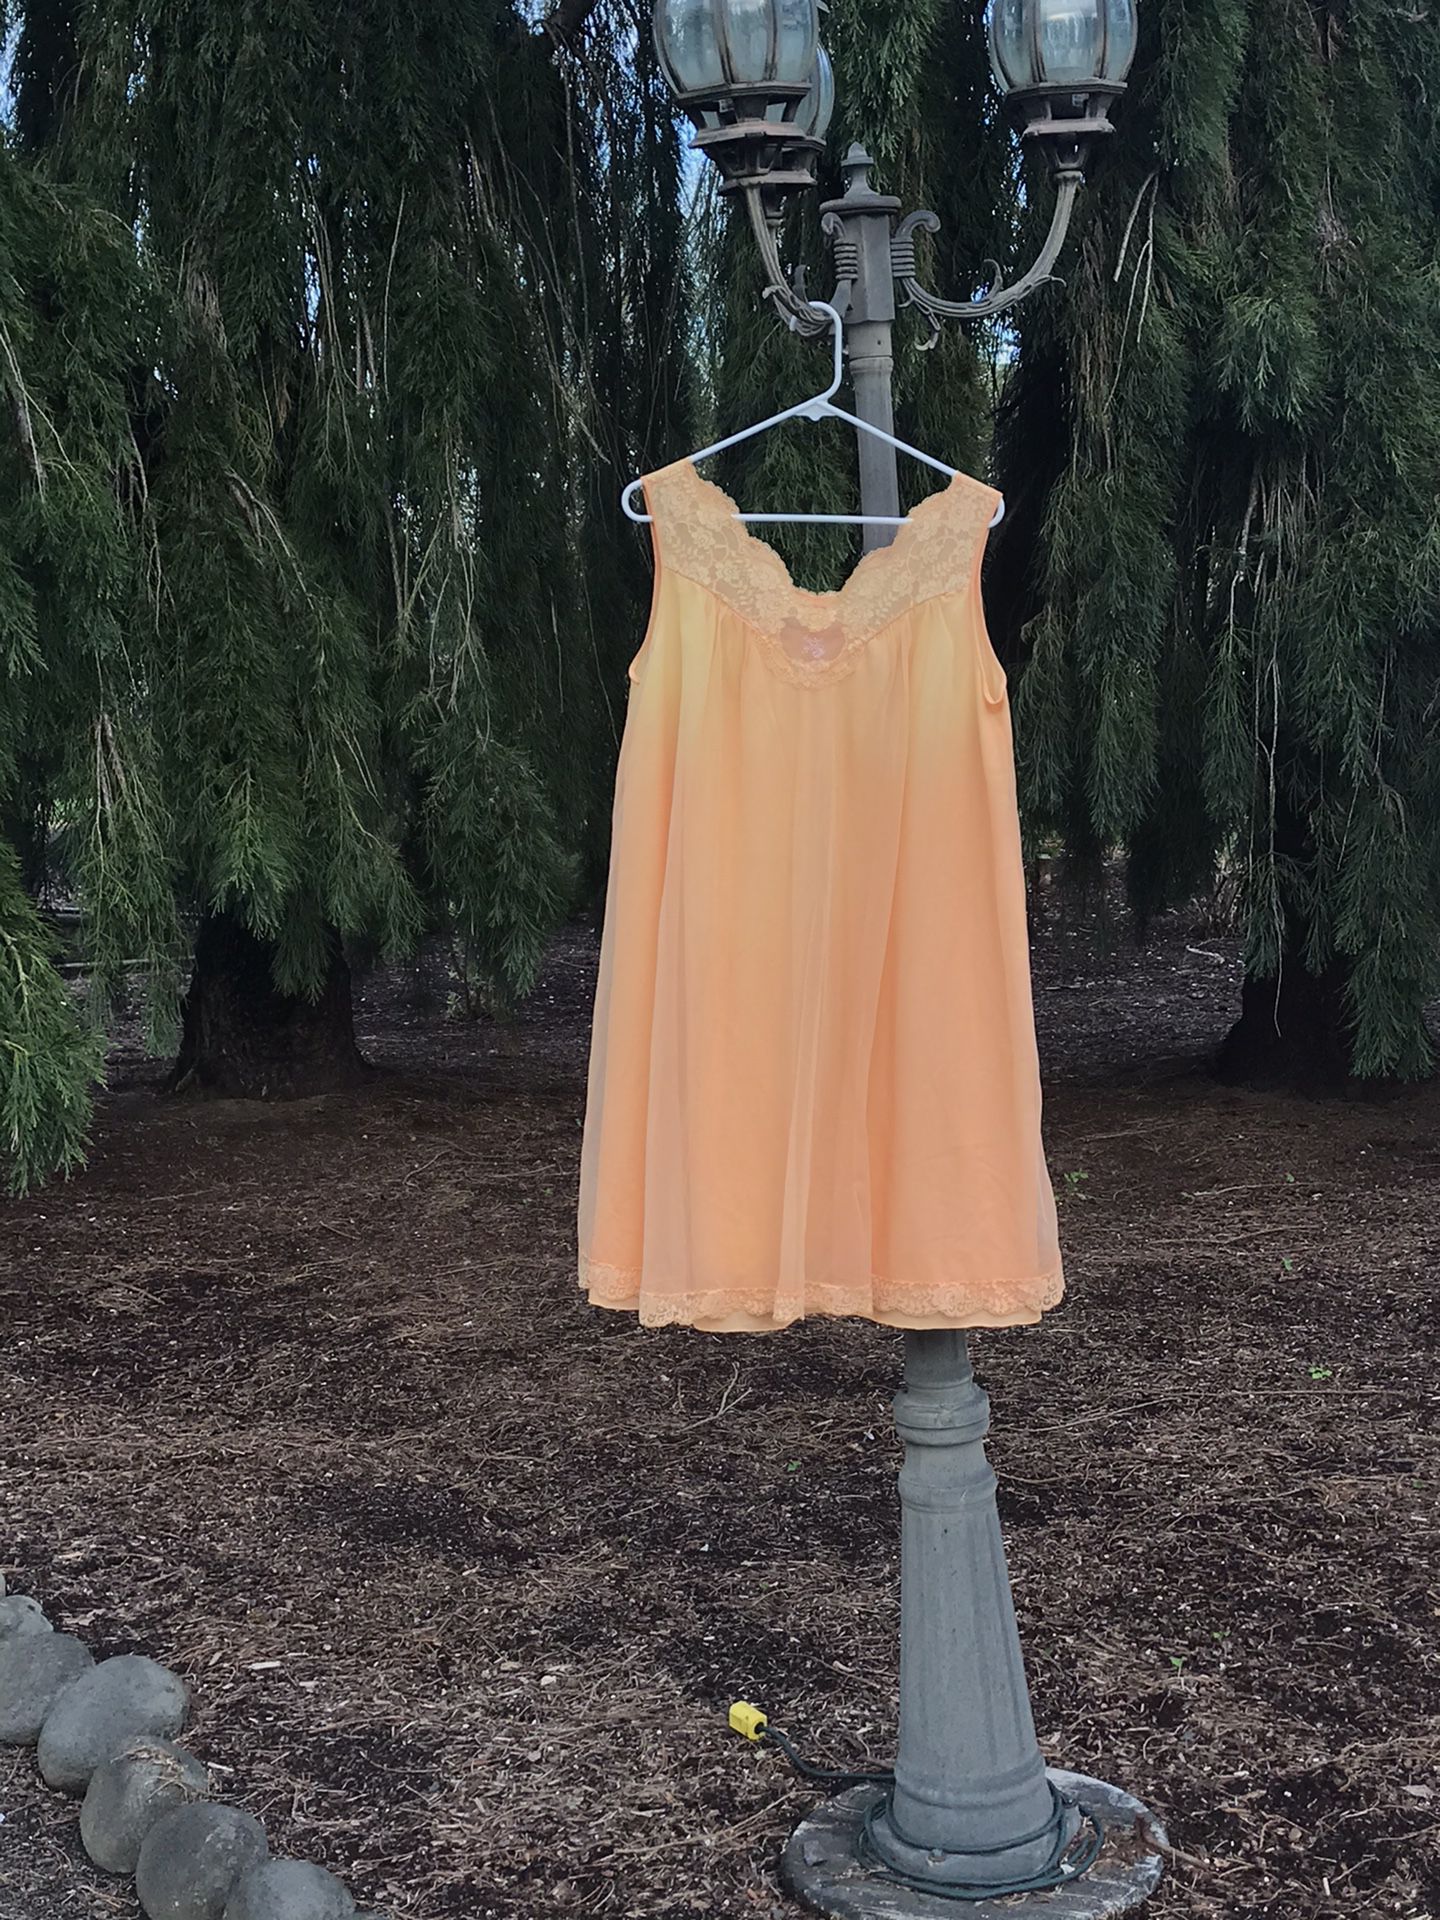 Pretty, Vintage, Women’s Nightgown-Peach in color